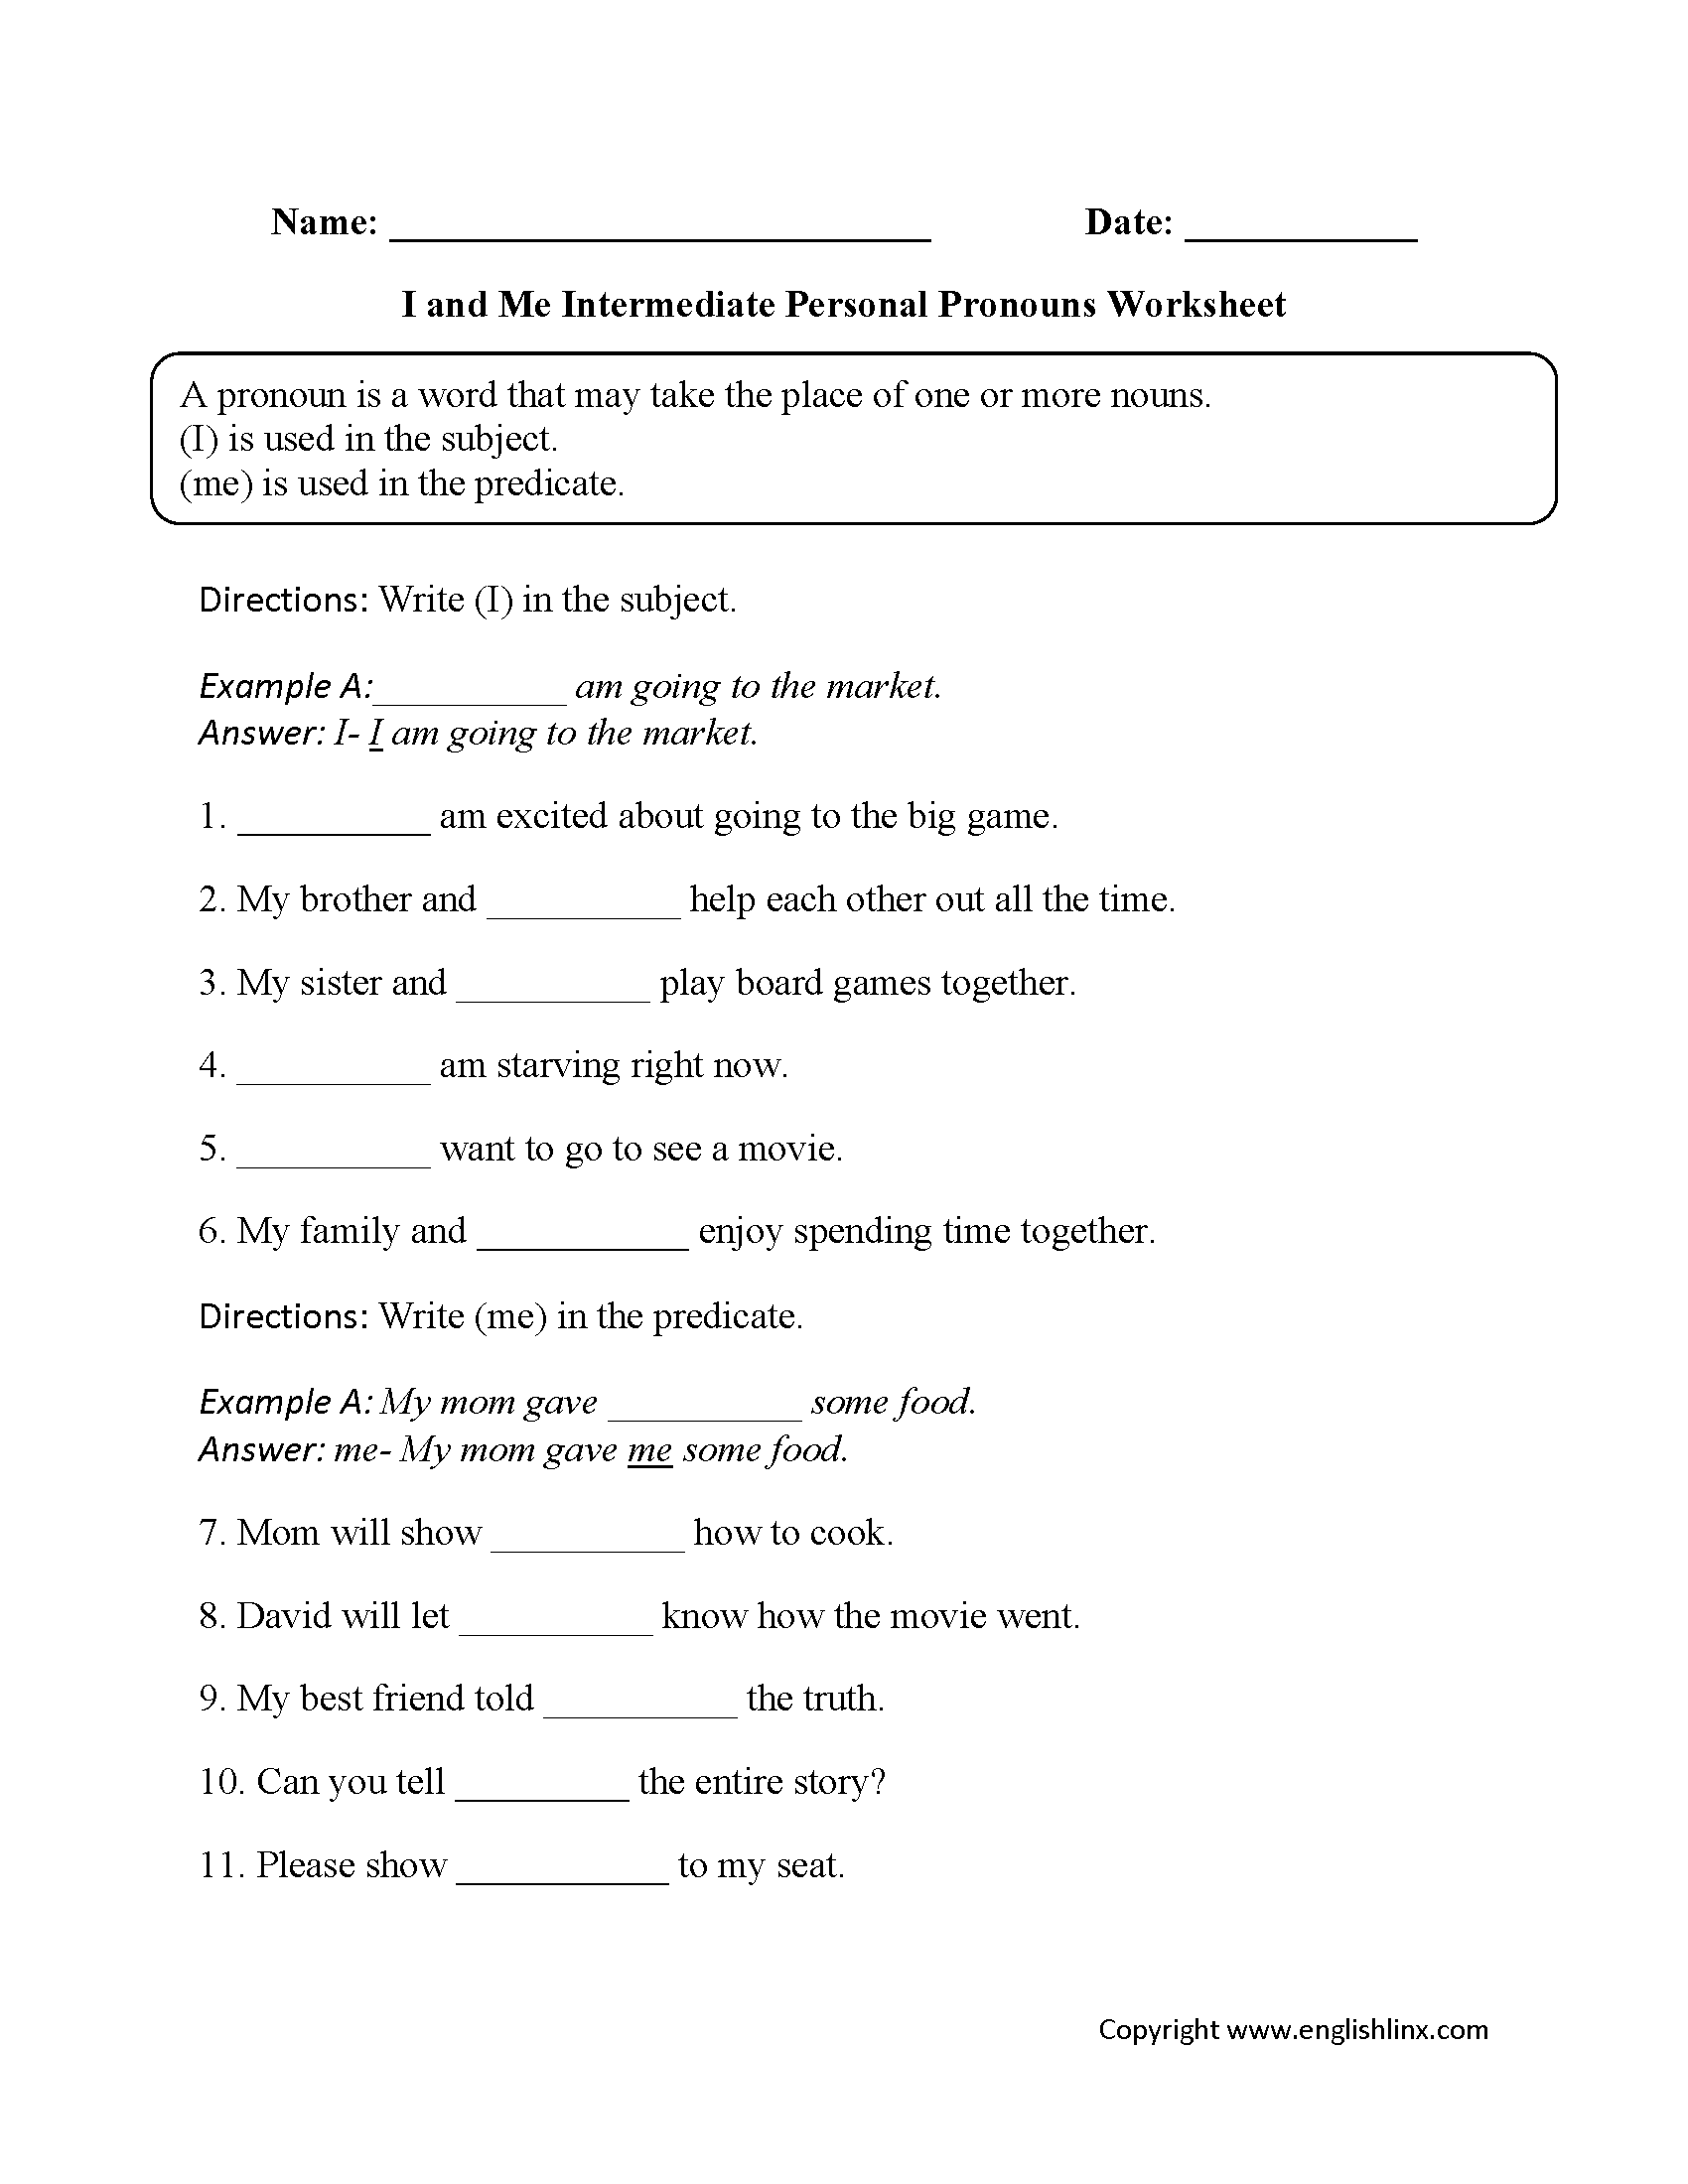 Personal Pronoun Worksheets For 6th Grade - personal pronouns